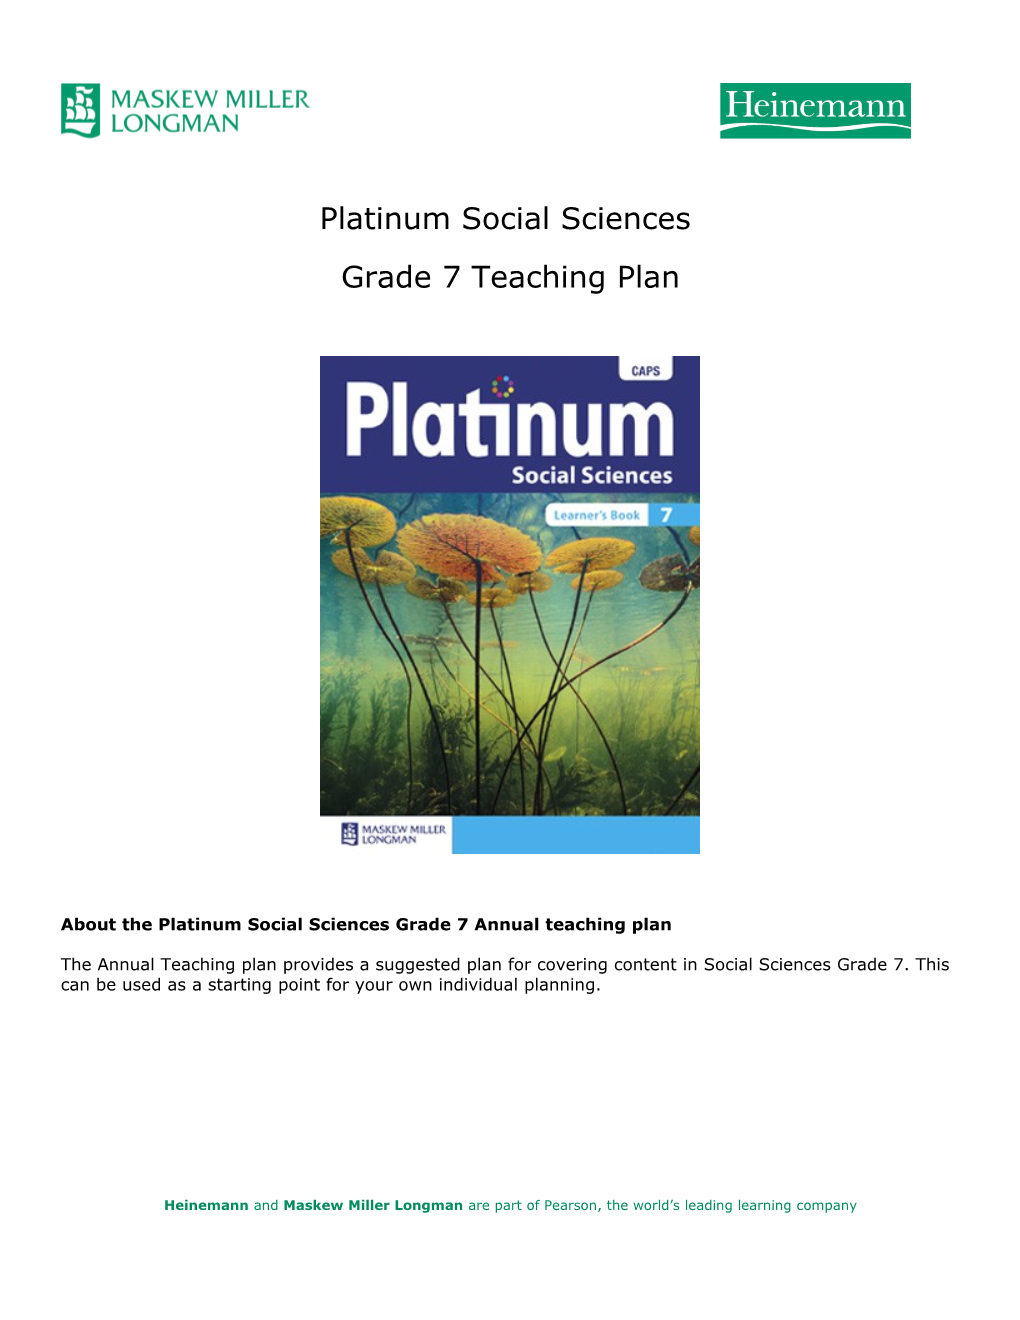 About the Platinum Social Sciencesgrade 7 Annual Teaching Plan